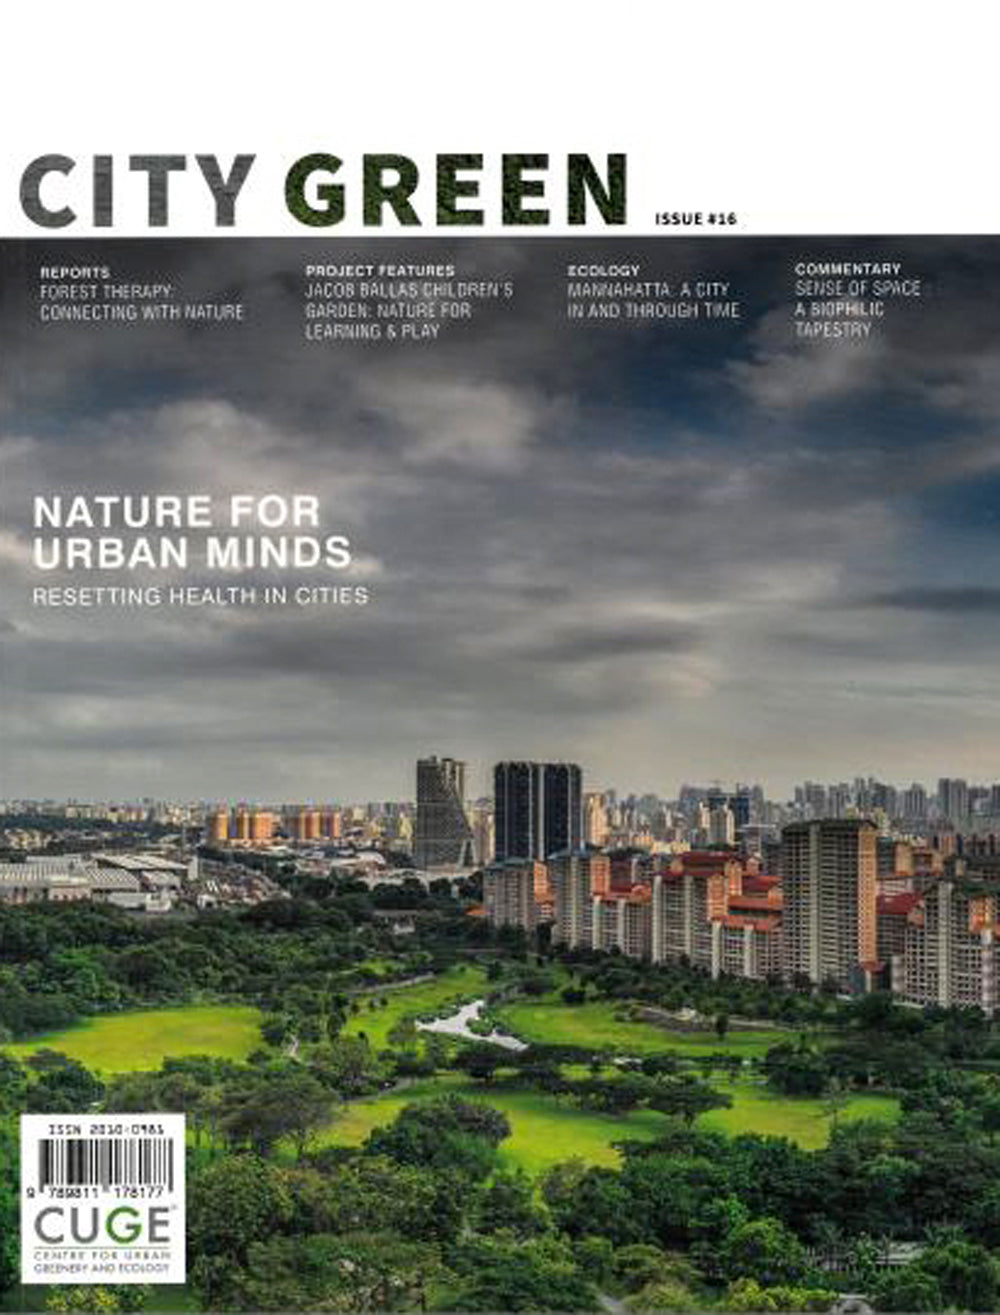 CITYGREEN Issue 16